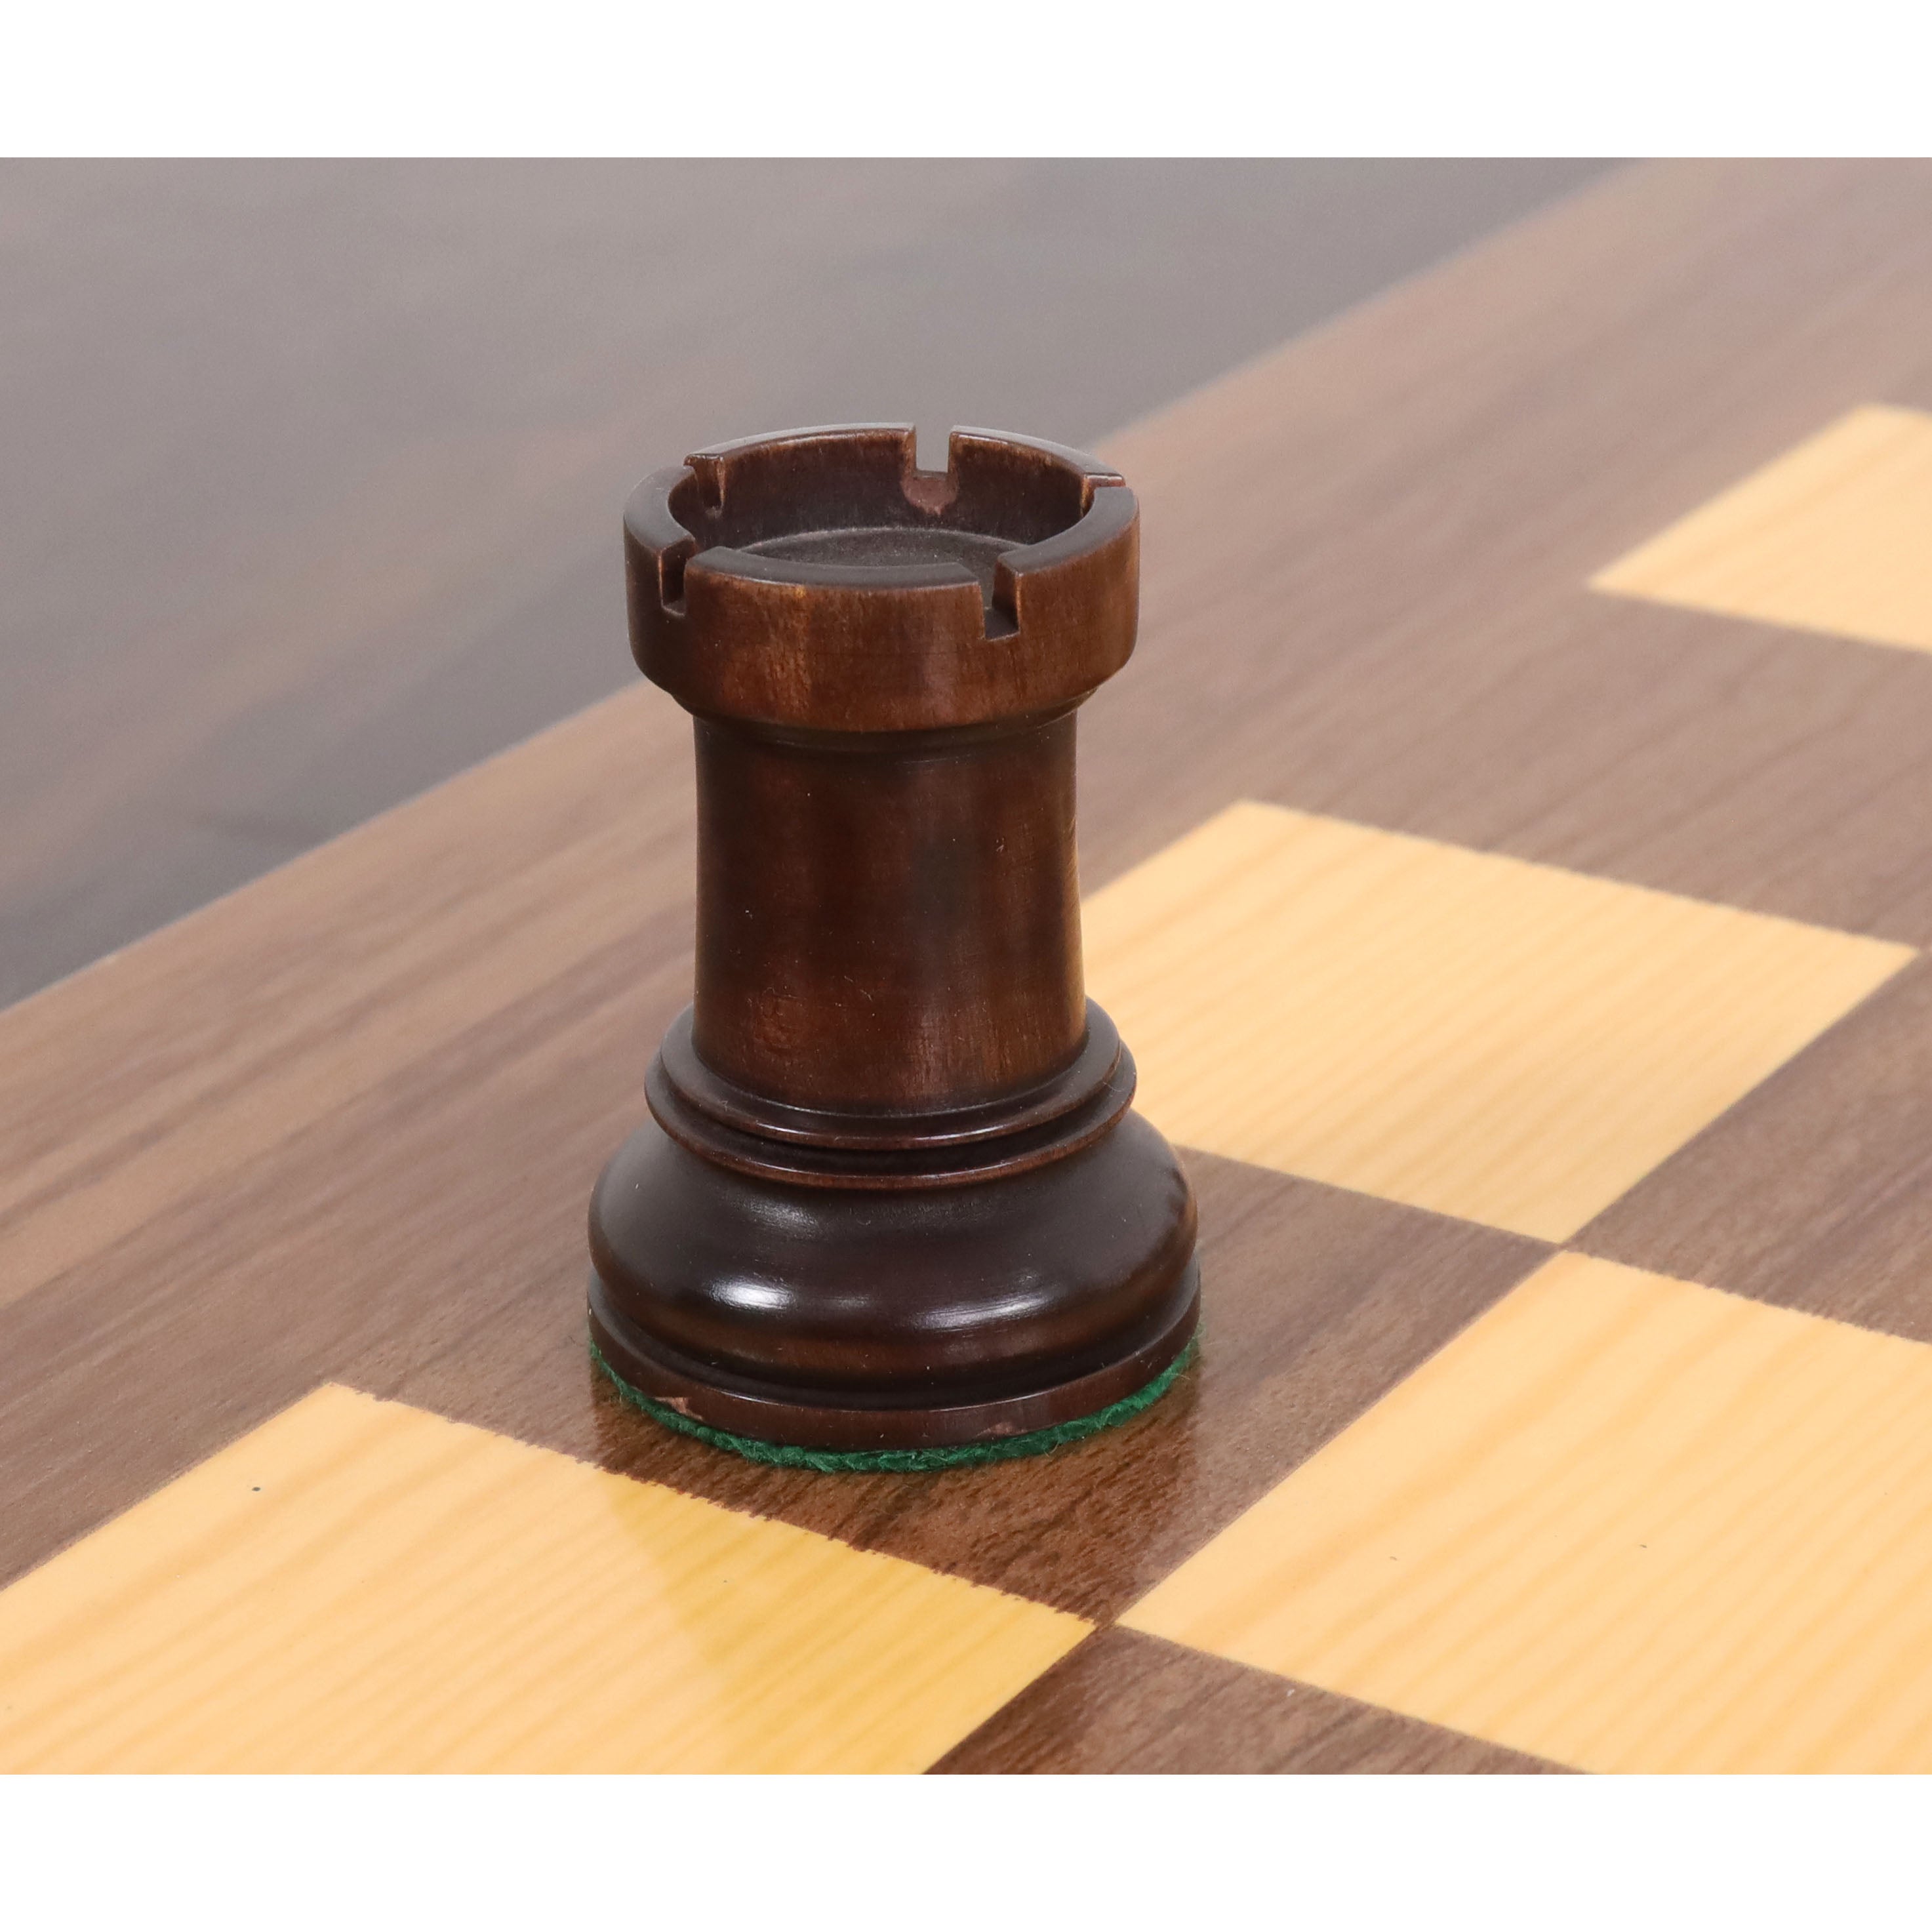 Analysis Chess Pieces – 30 Black & Natural Pieces w/ Felt Bottoms